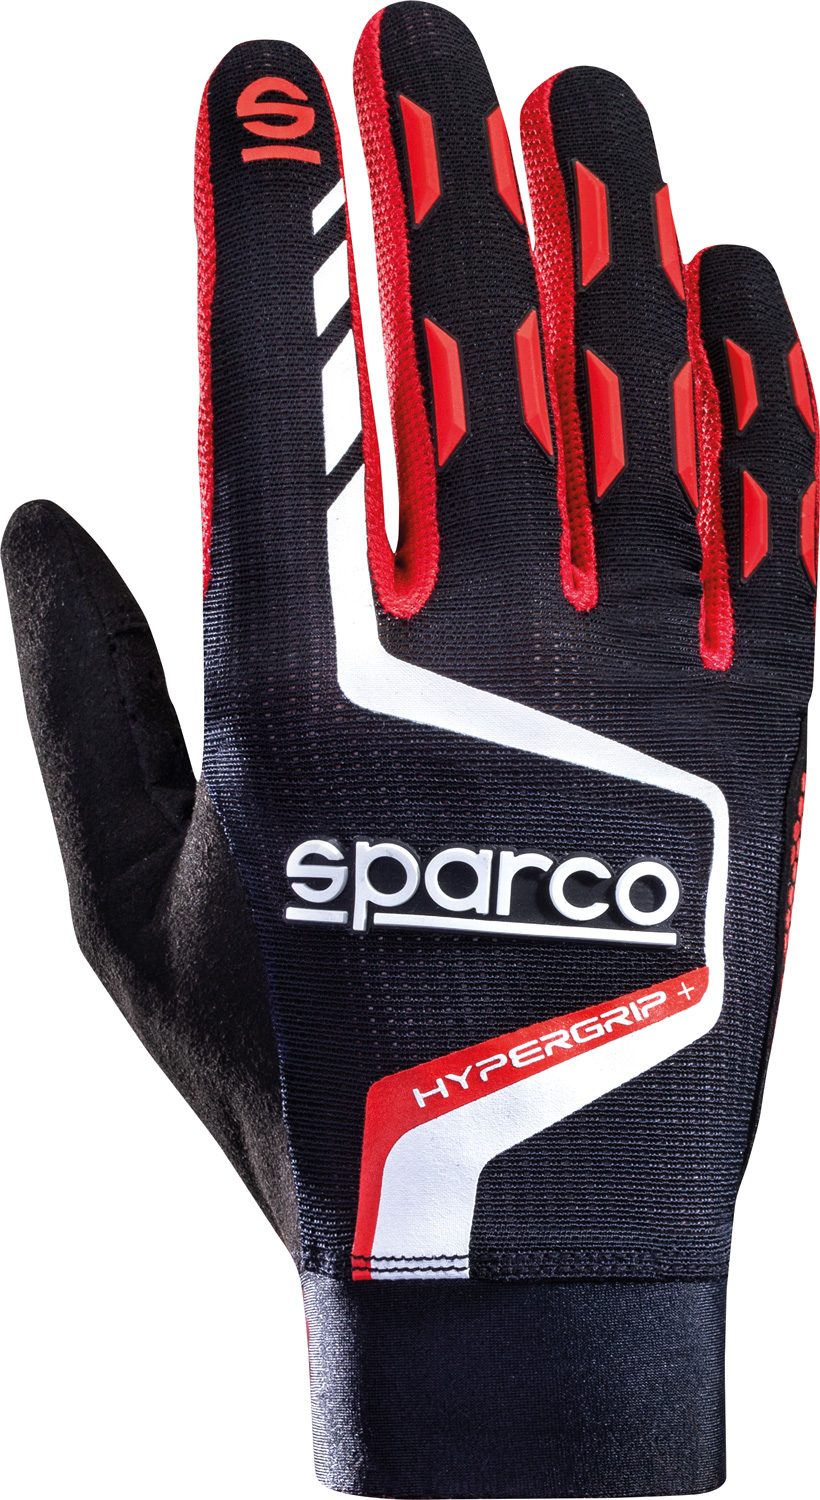 https://races-shop.com/486457/sparco-hypergrip-gloves-red.jpg